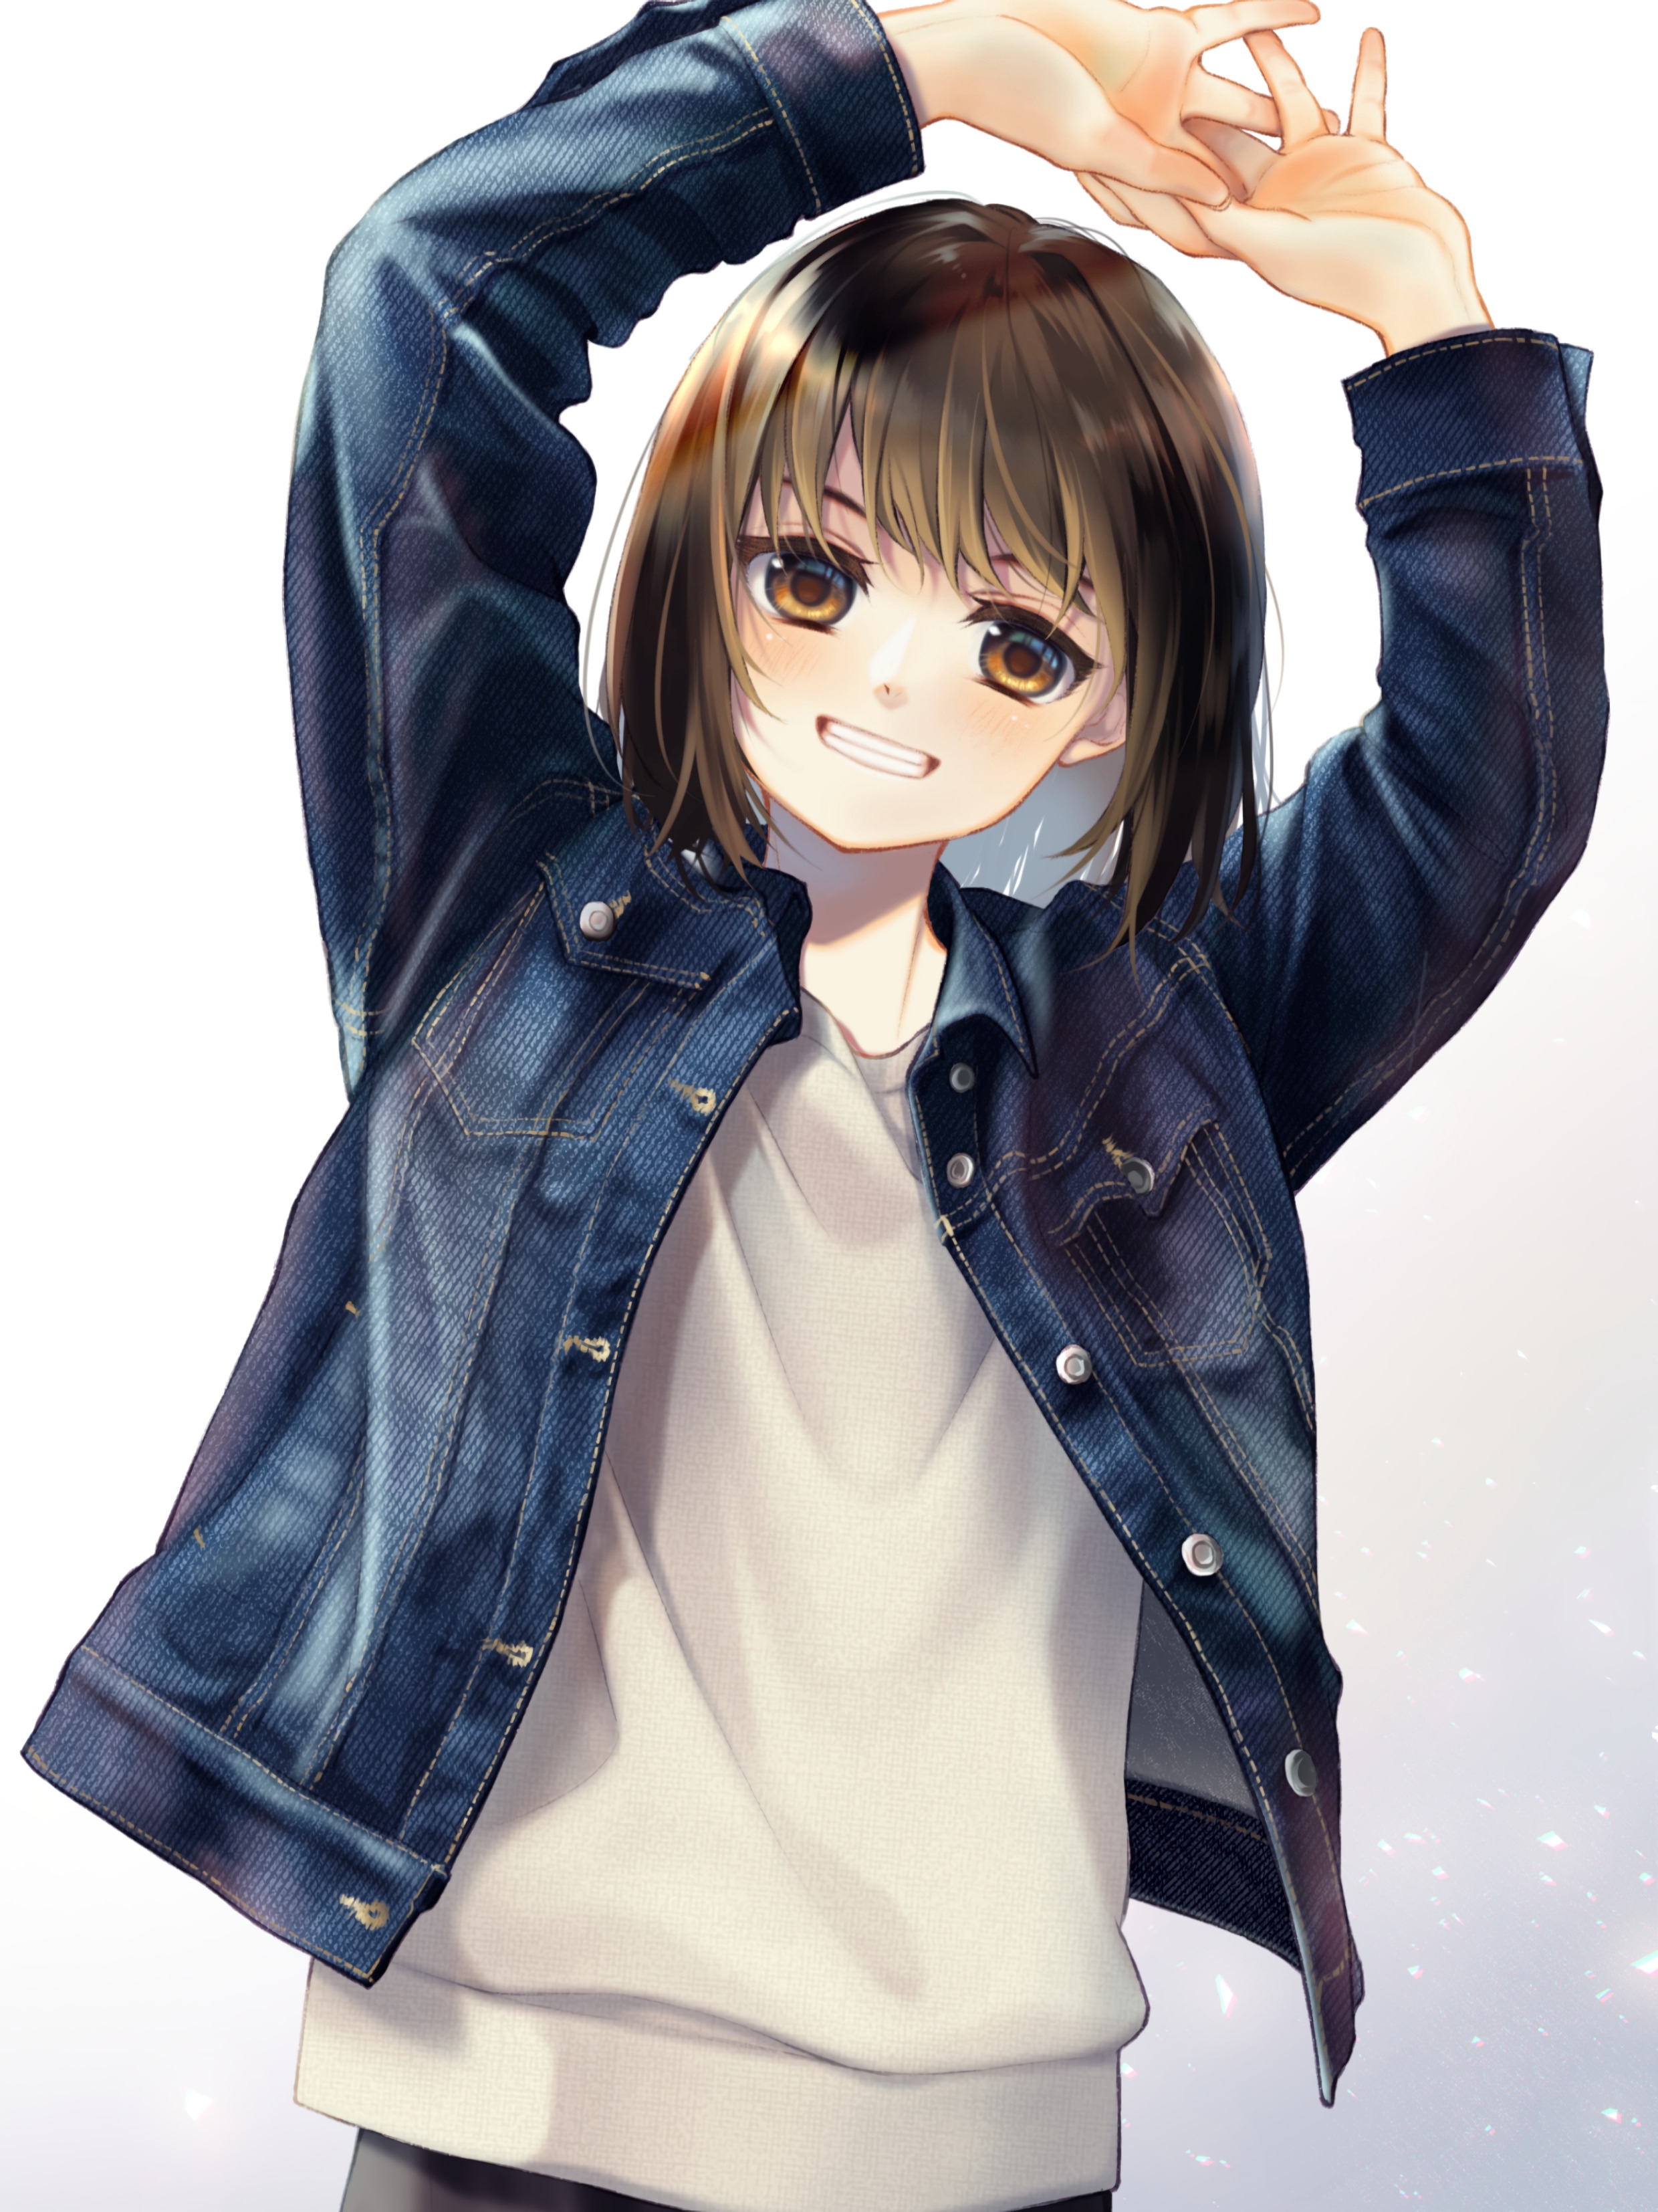 Download 2480x3308 Cute Anime Girl, Short Brown Hair, Big Smile, Jacket Wallpaper